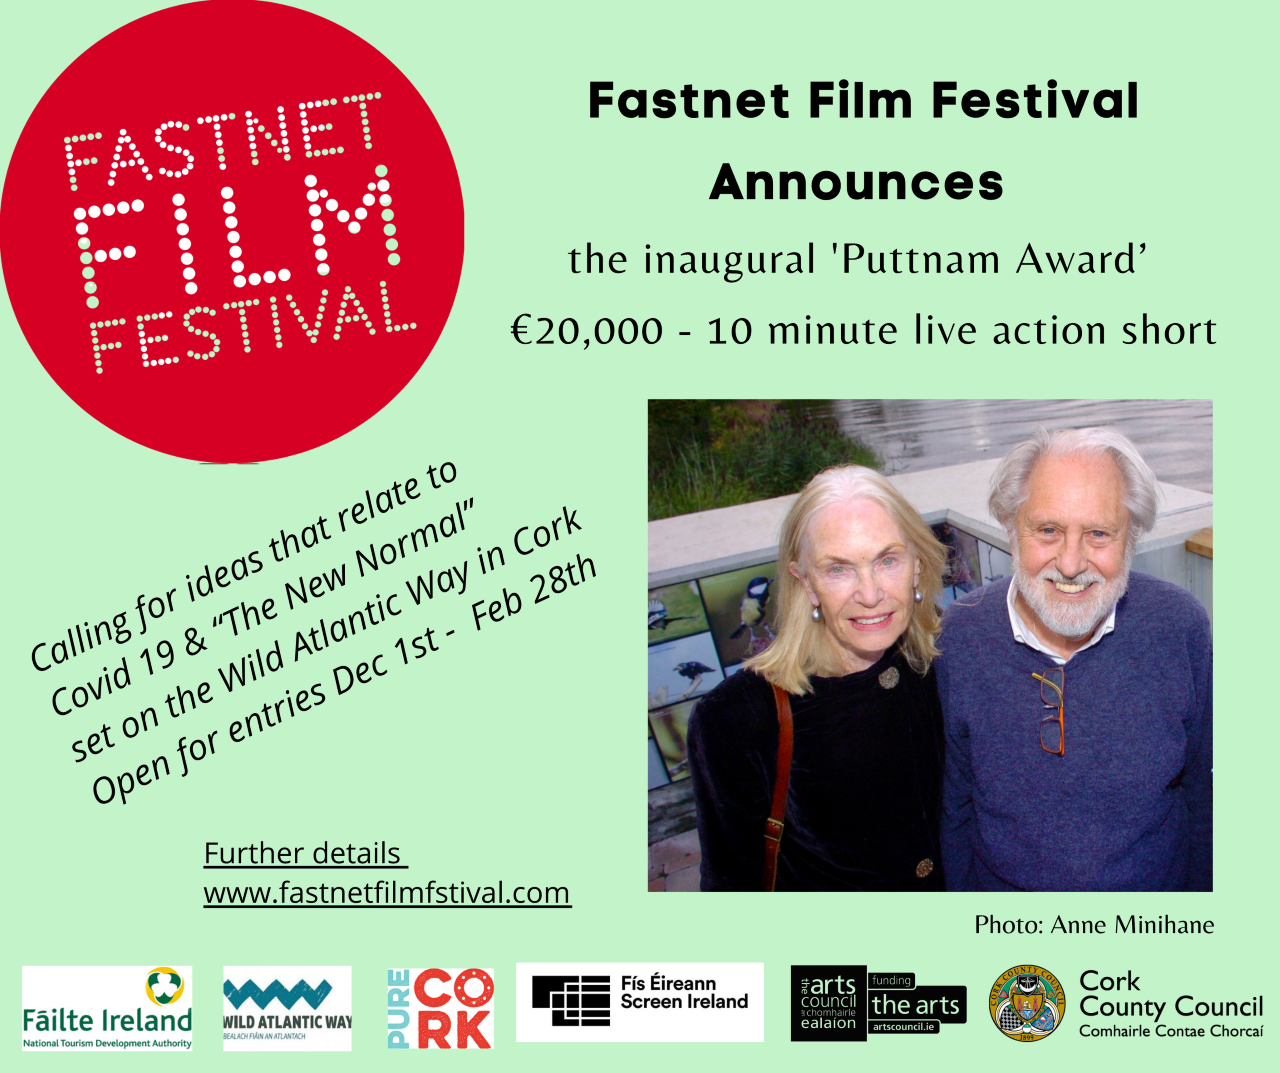 Fastnet Film Festival Announces ‘The Puttnam Award’